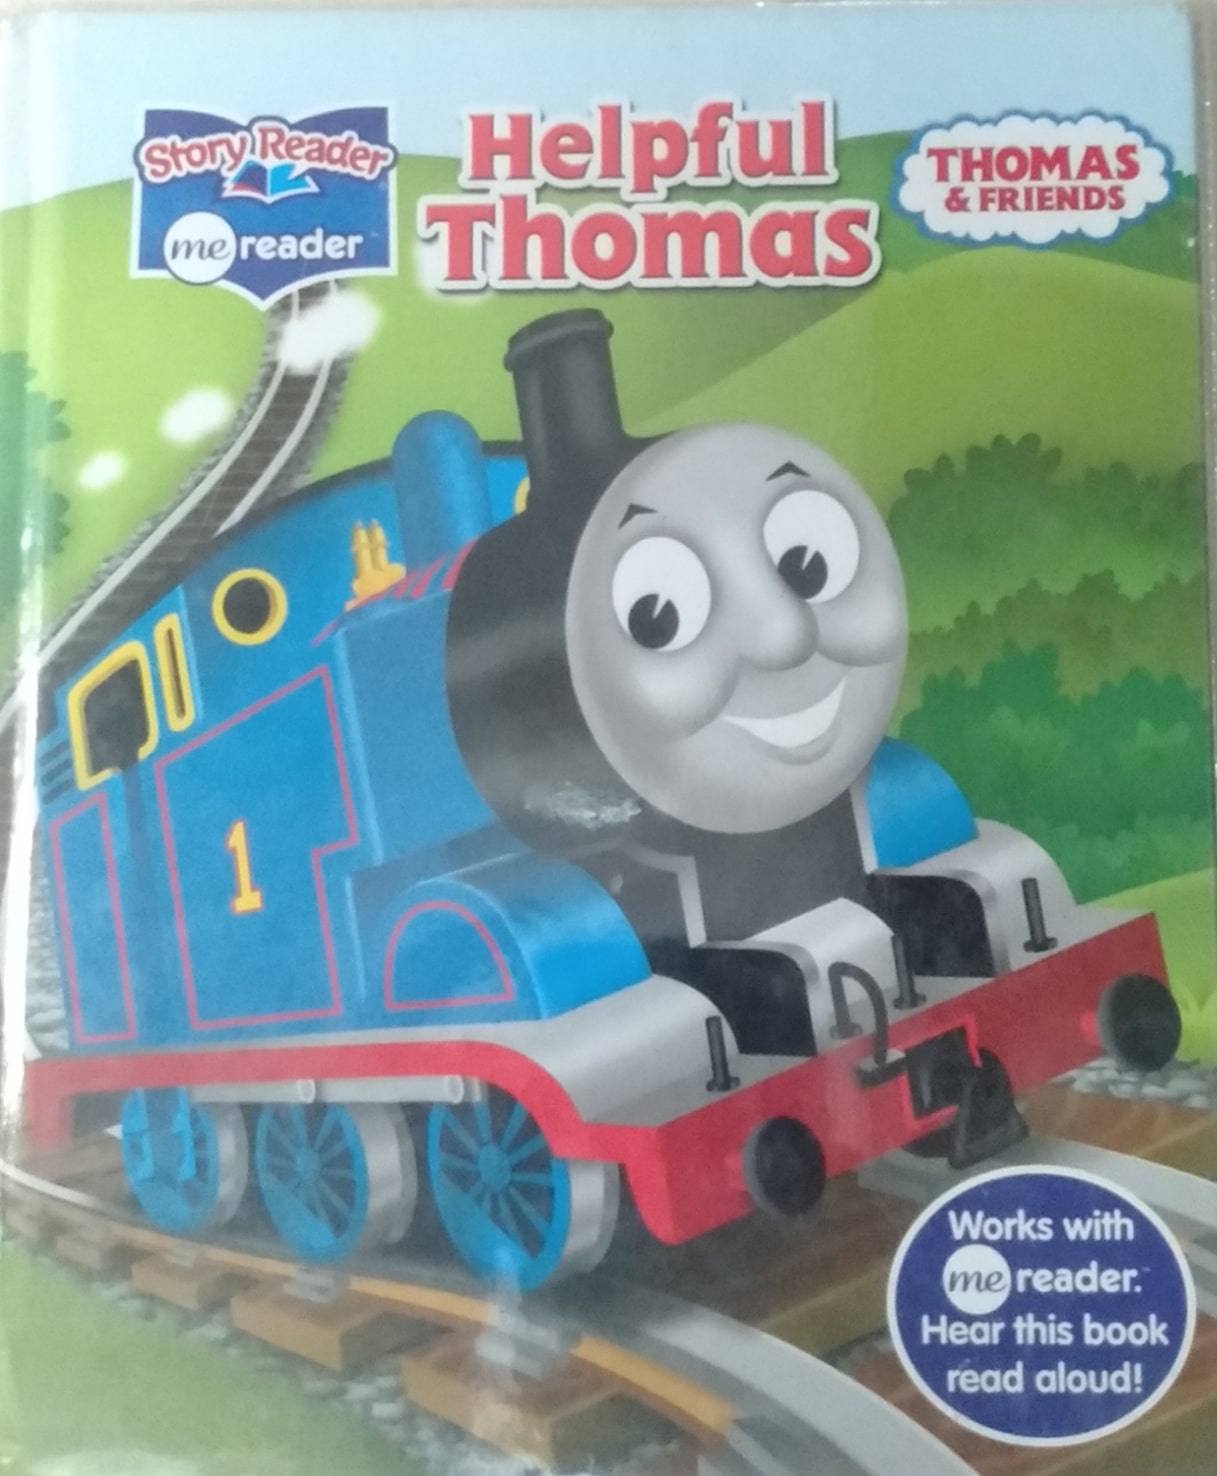 IMG : Thomas and friends - Helpful Thomas